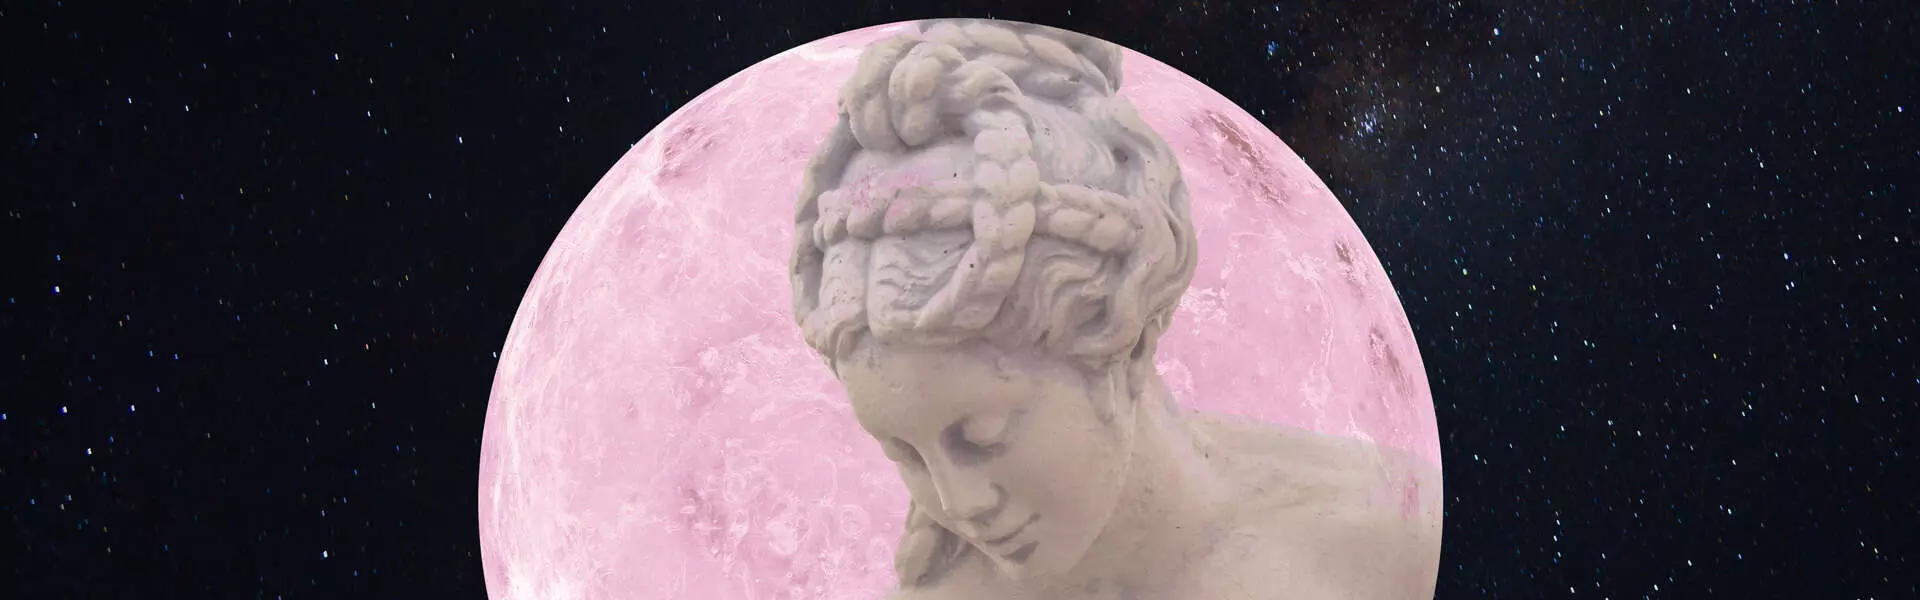 Venus i astrologi - Planet of Love and Harmony